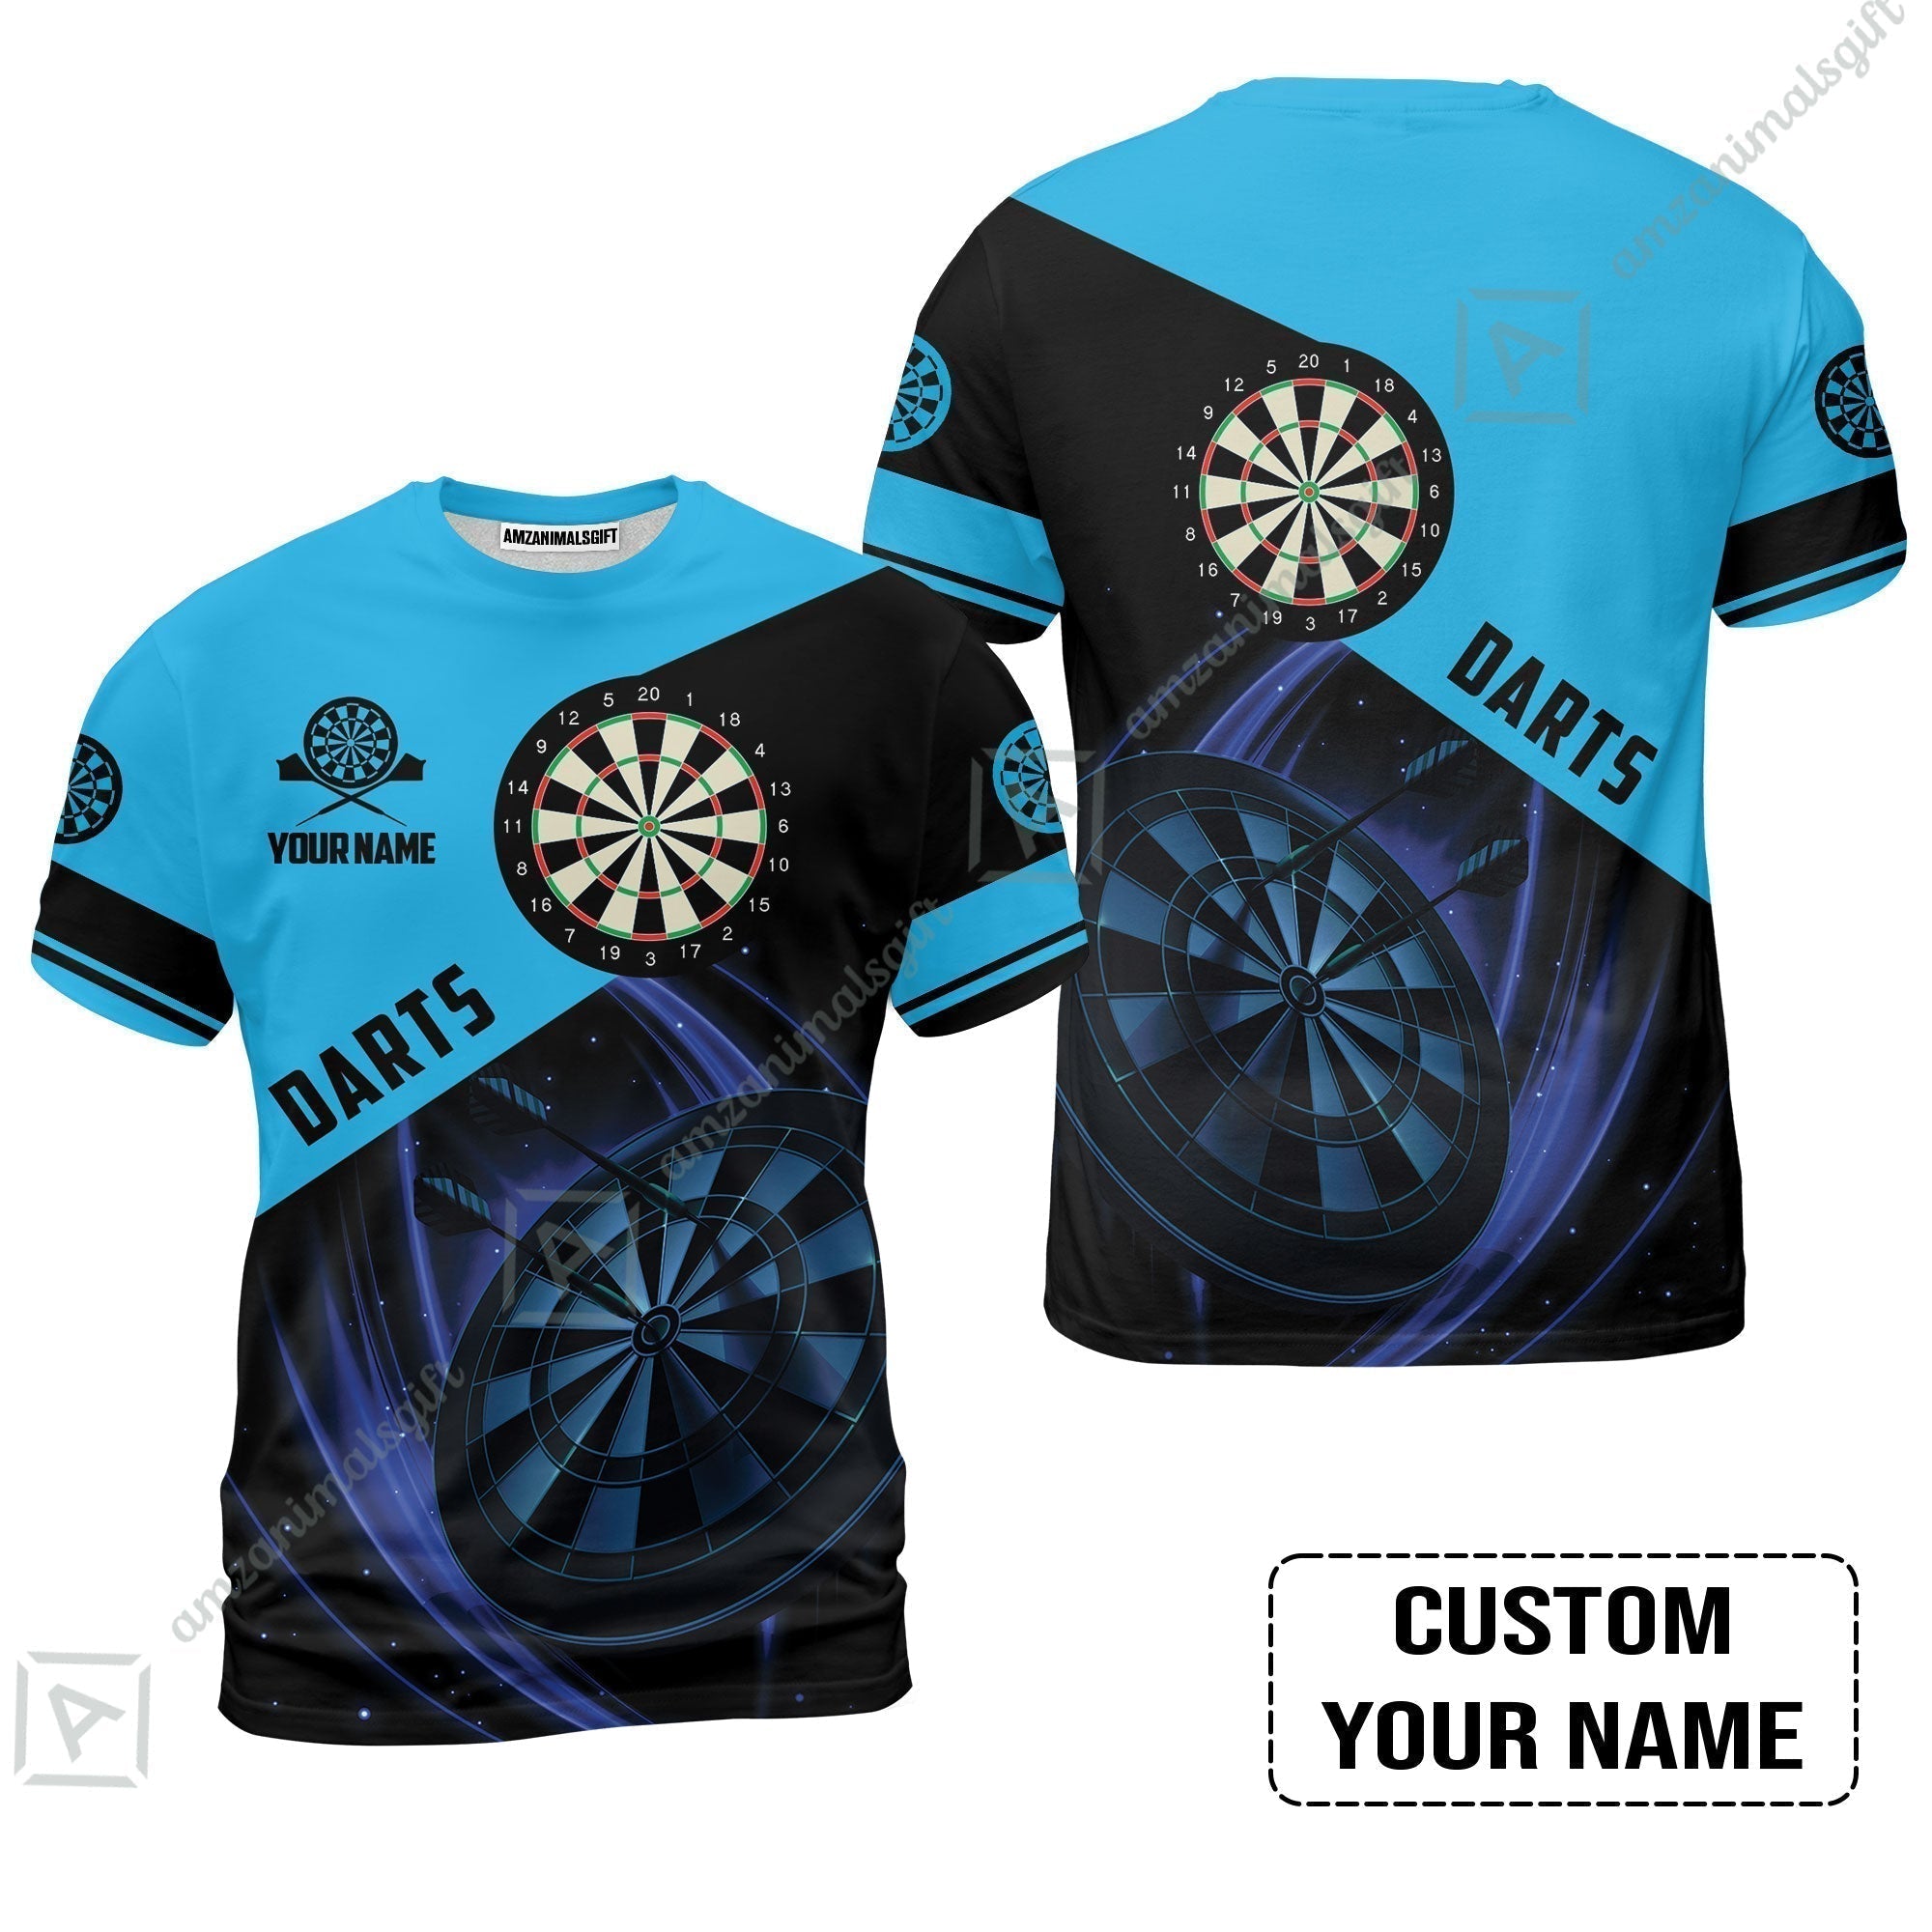 Customized Name Darts T-Shirt, Dartboard Personalized Name Blue Darts Team T-Shirt